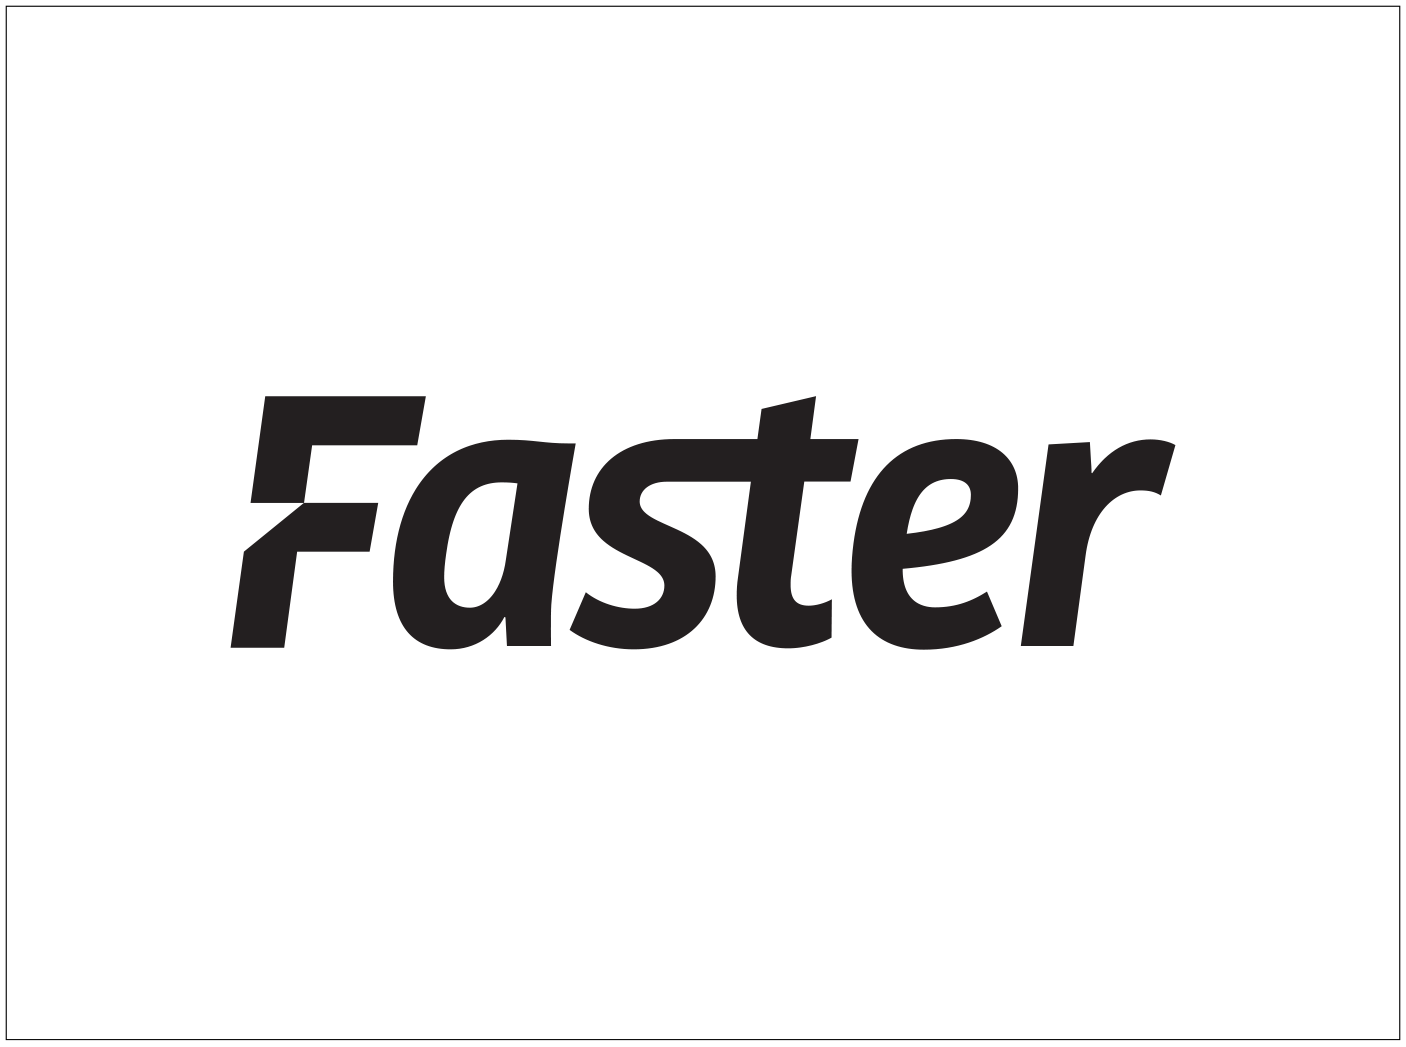 Fast надпись. Faster надпись. Faster лого. E fast. Please fast